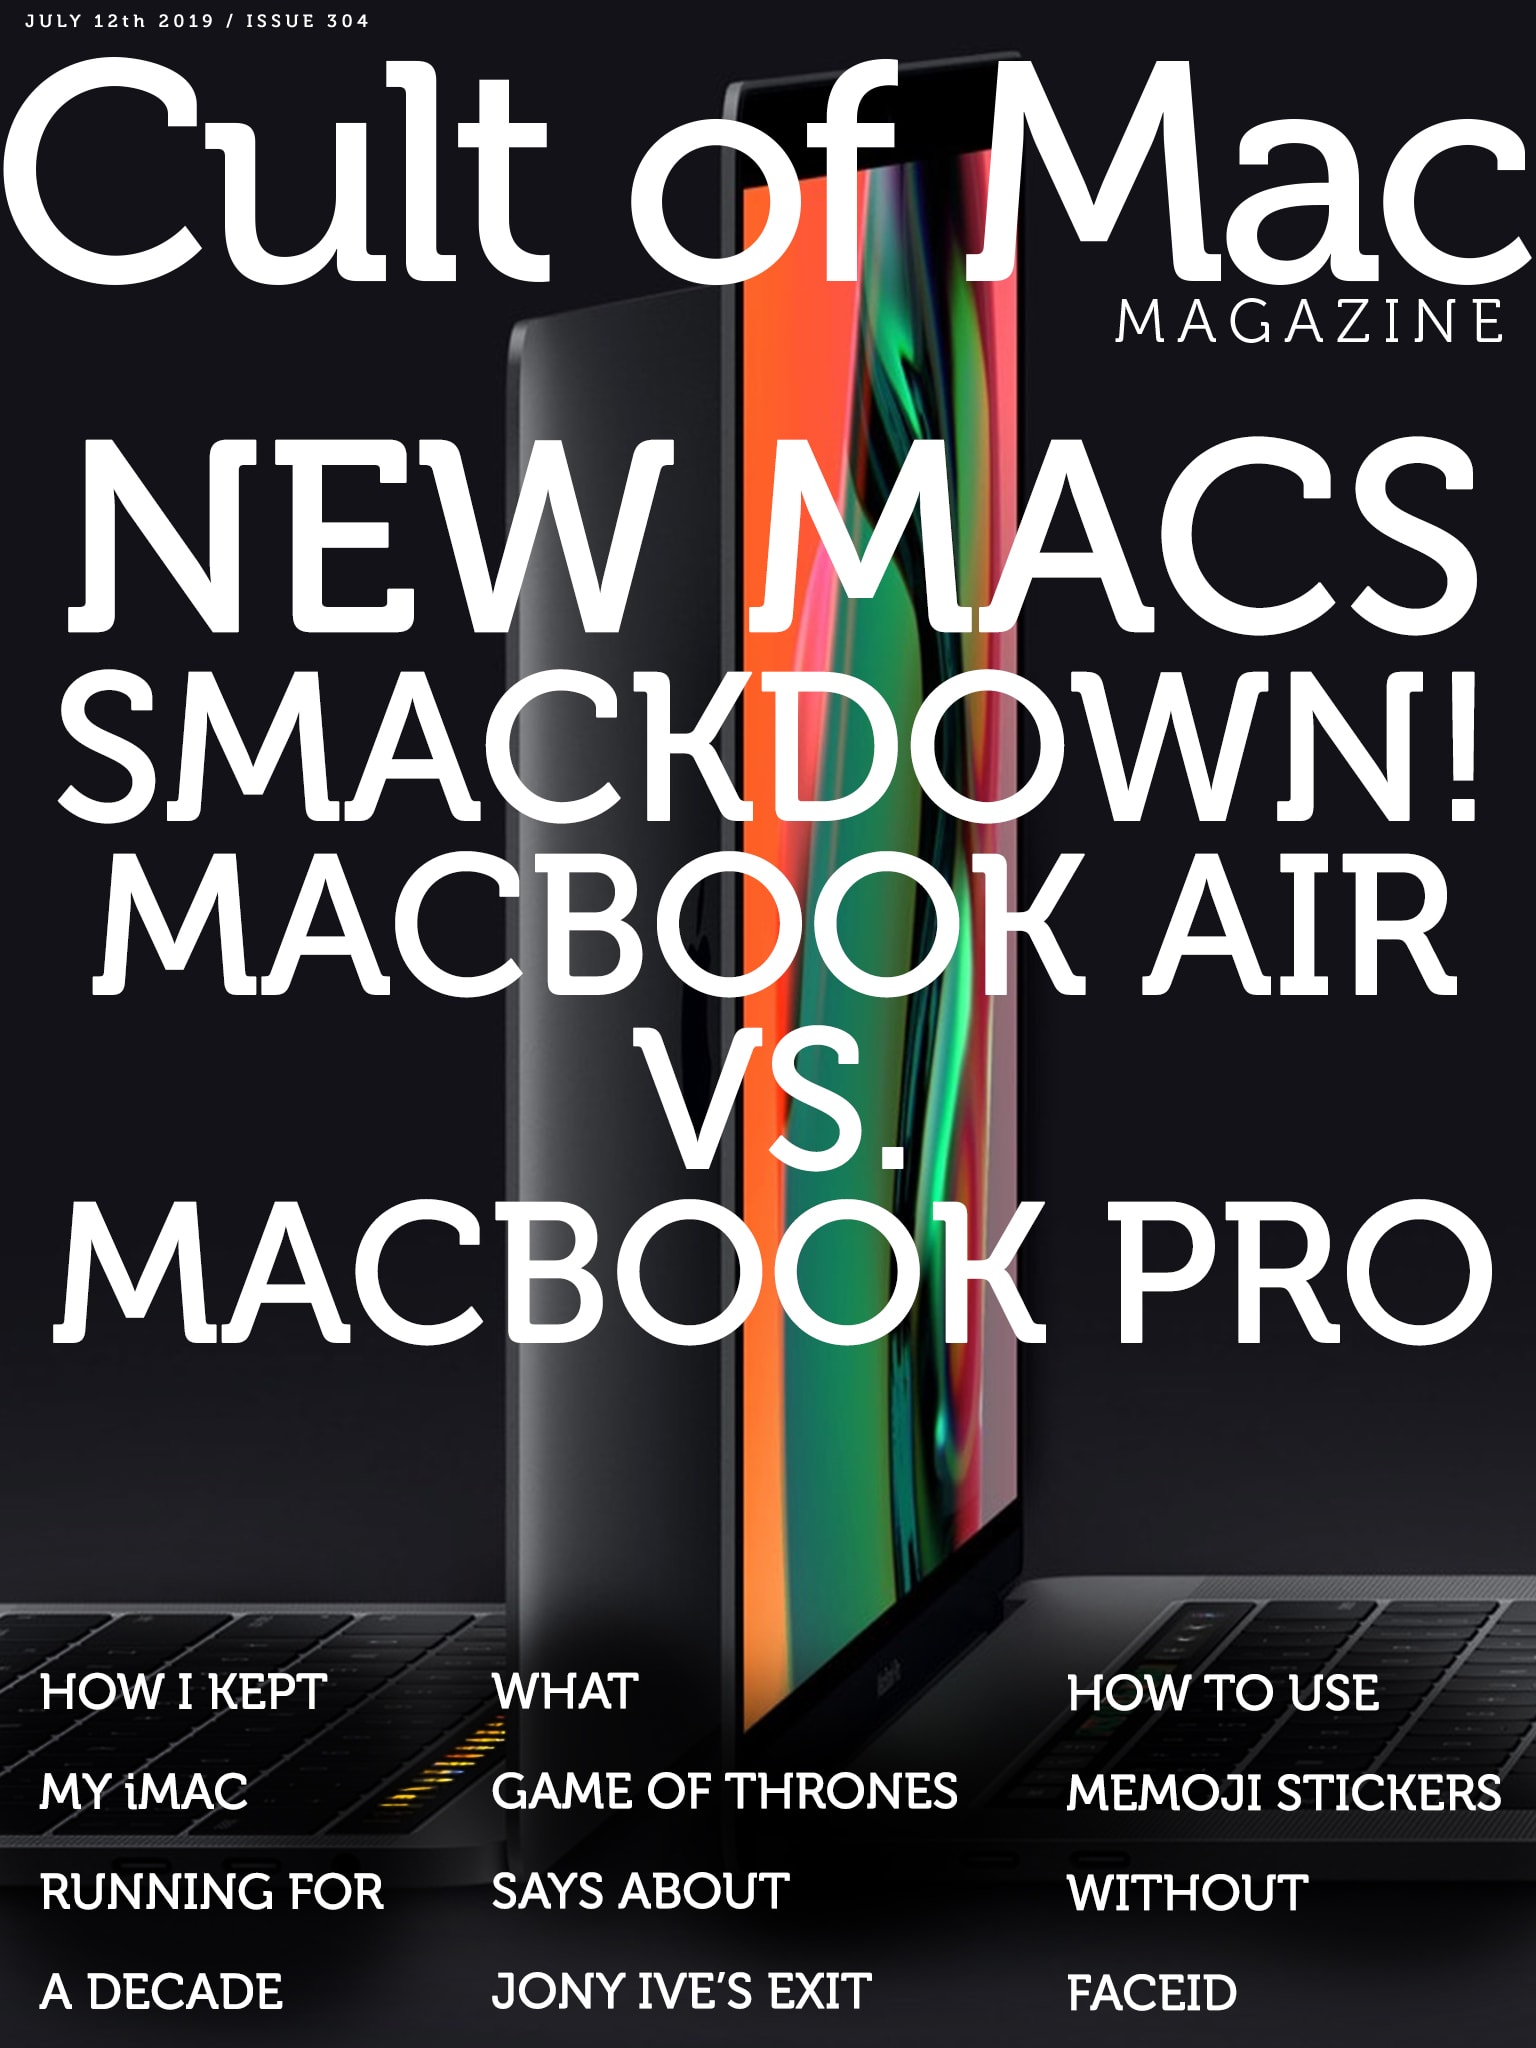 New Macs smackdown in Cult of Mac Magazine No. 304